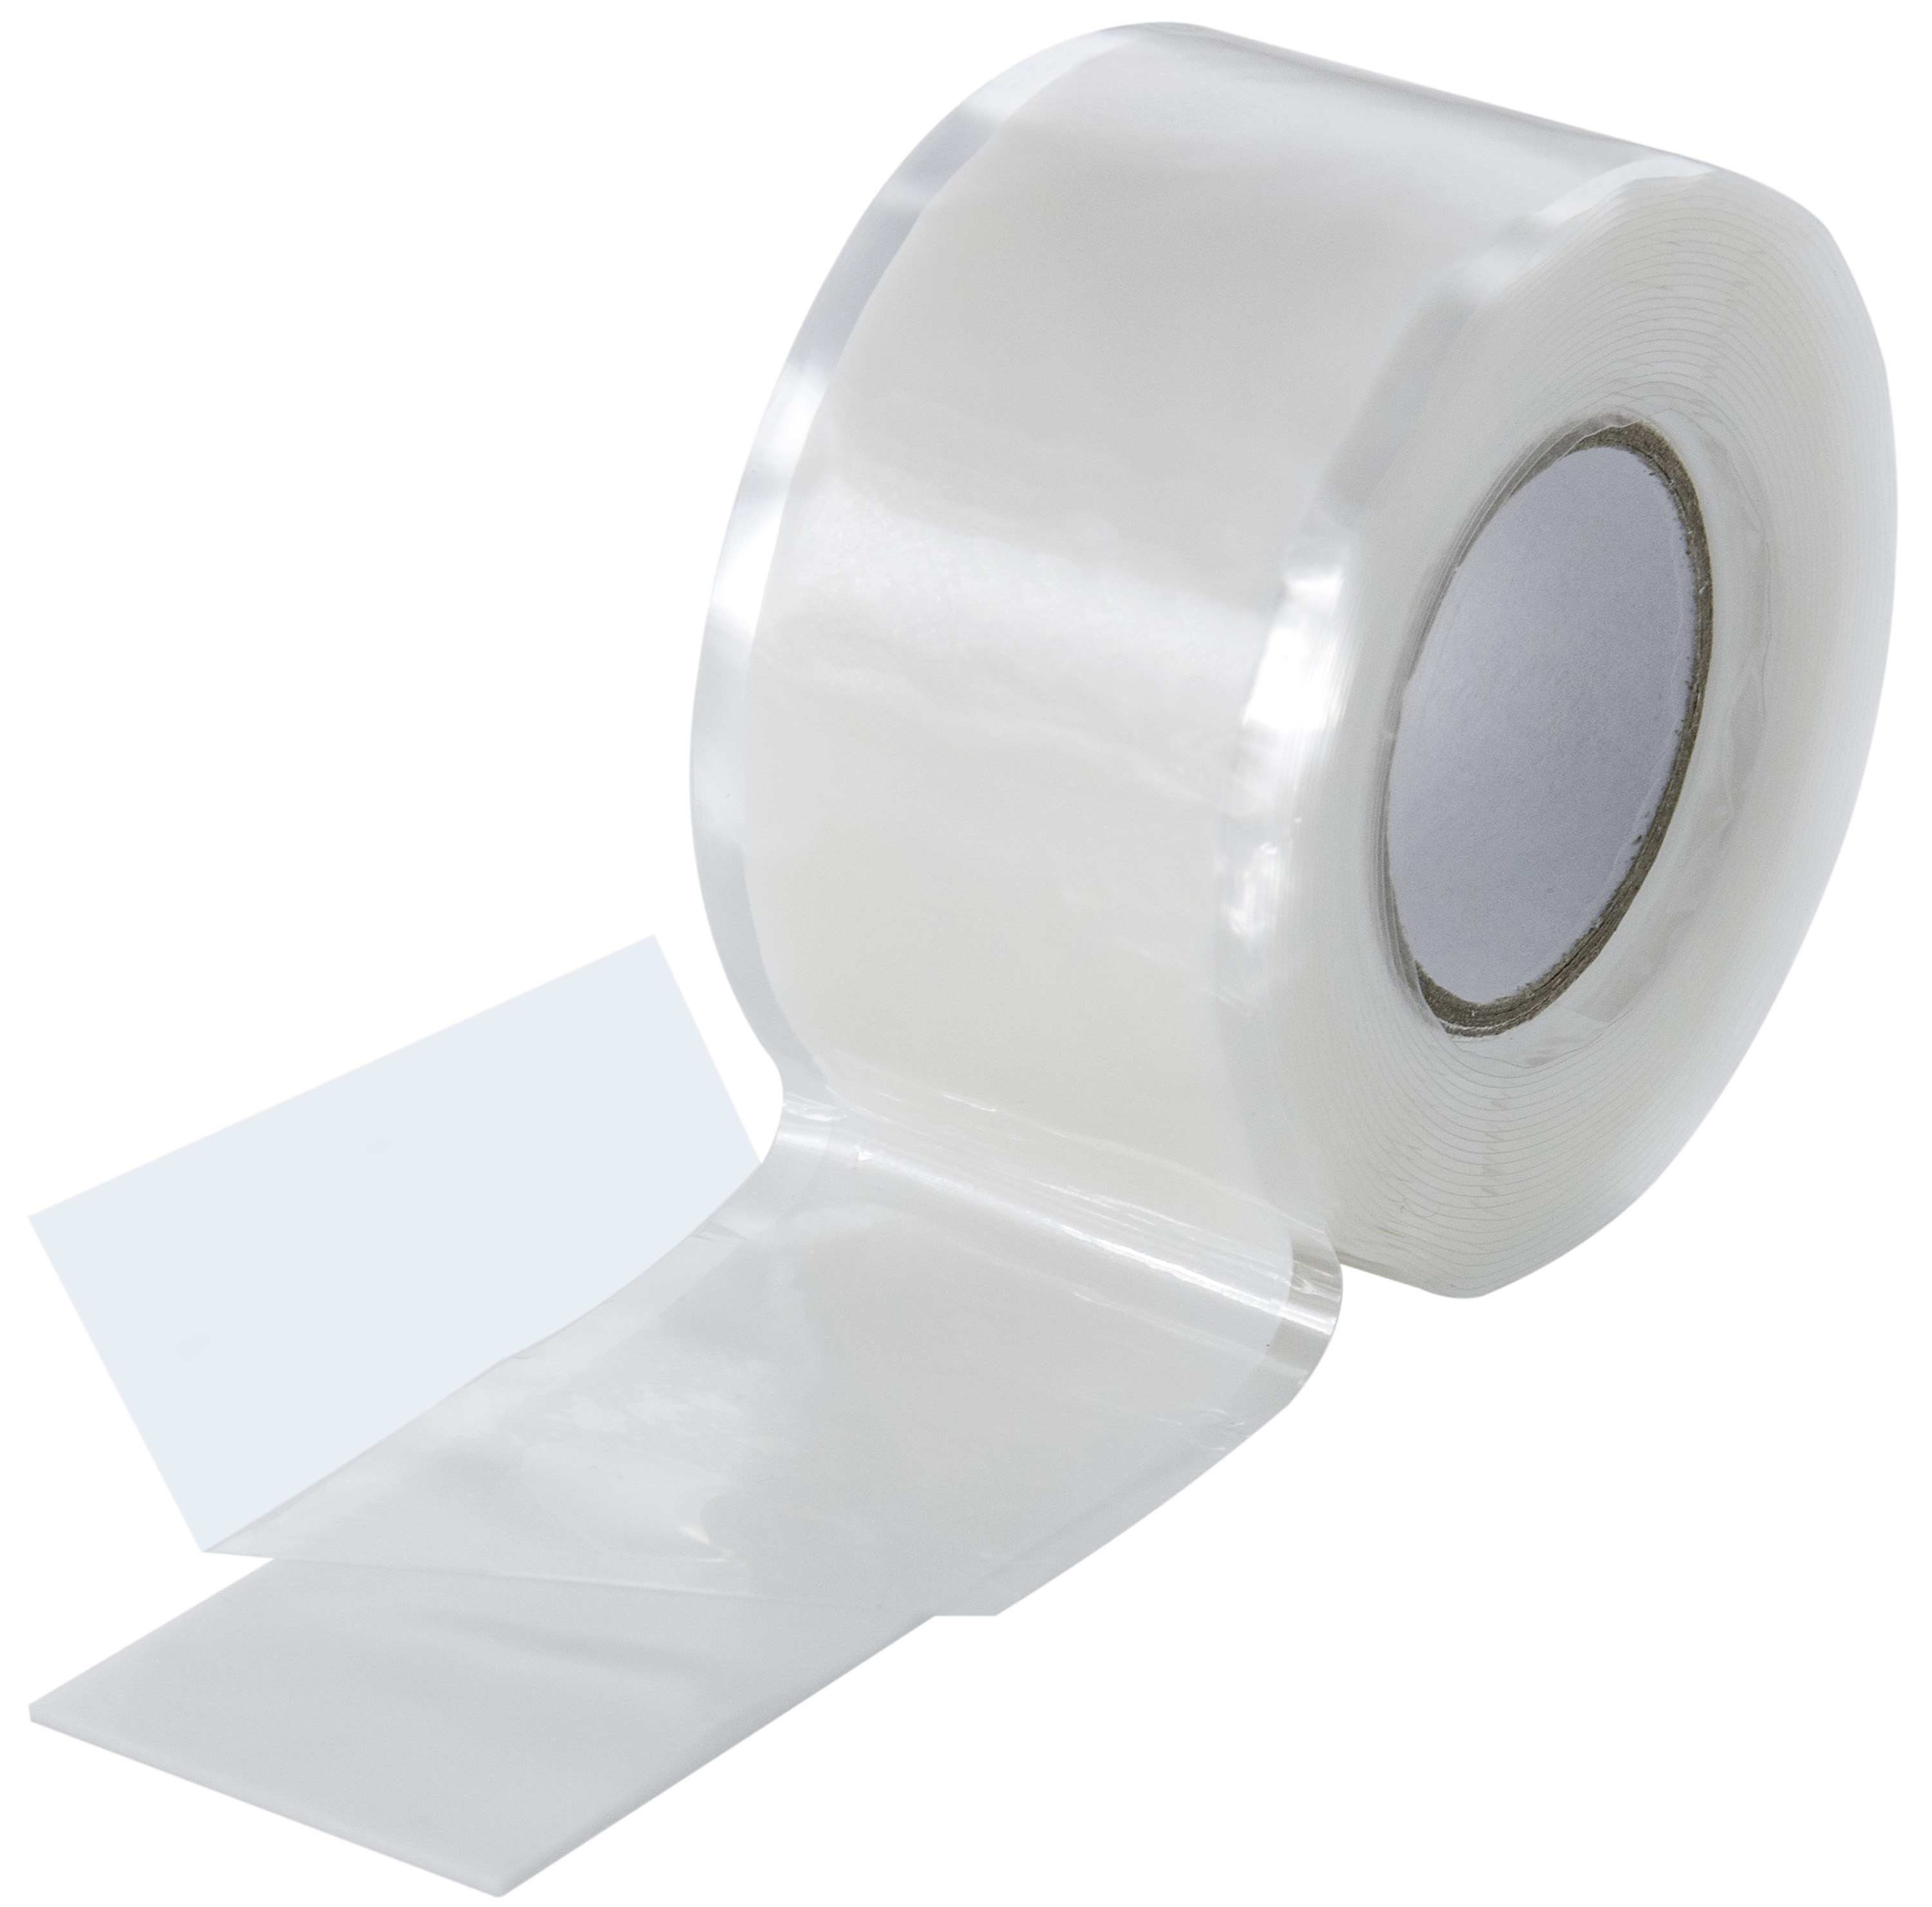 für Vakuuminfusion geeignet HT Klebeband 50mm breit Polyesterband mit Silikon 